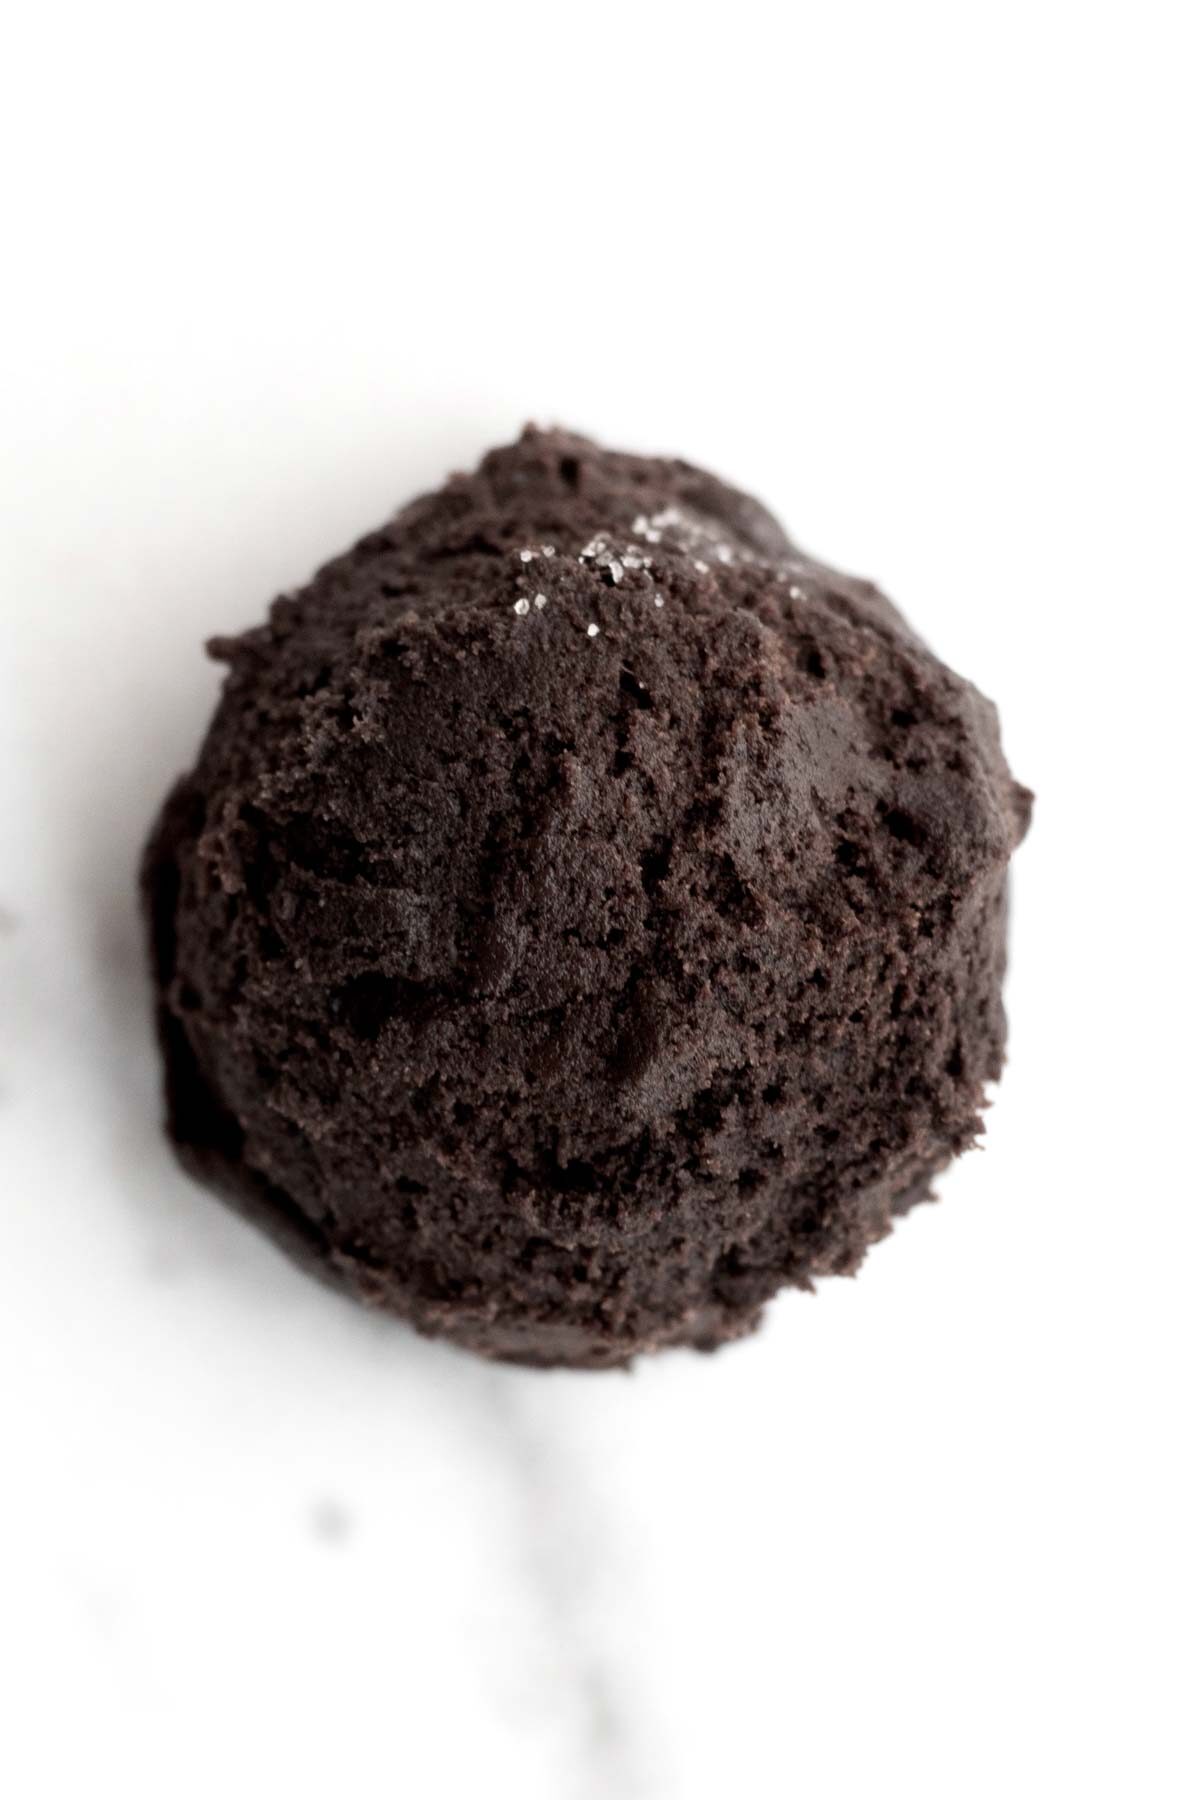 A ball of chocolate dough.